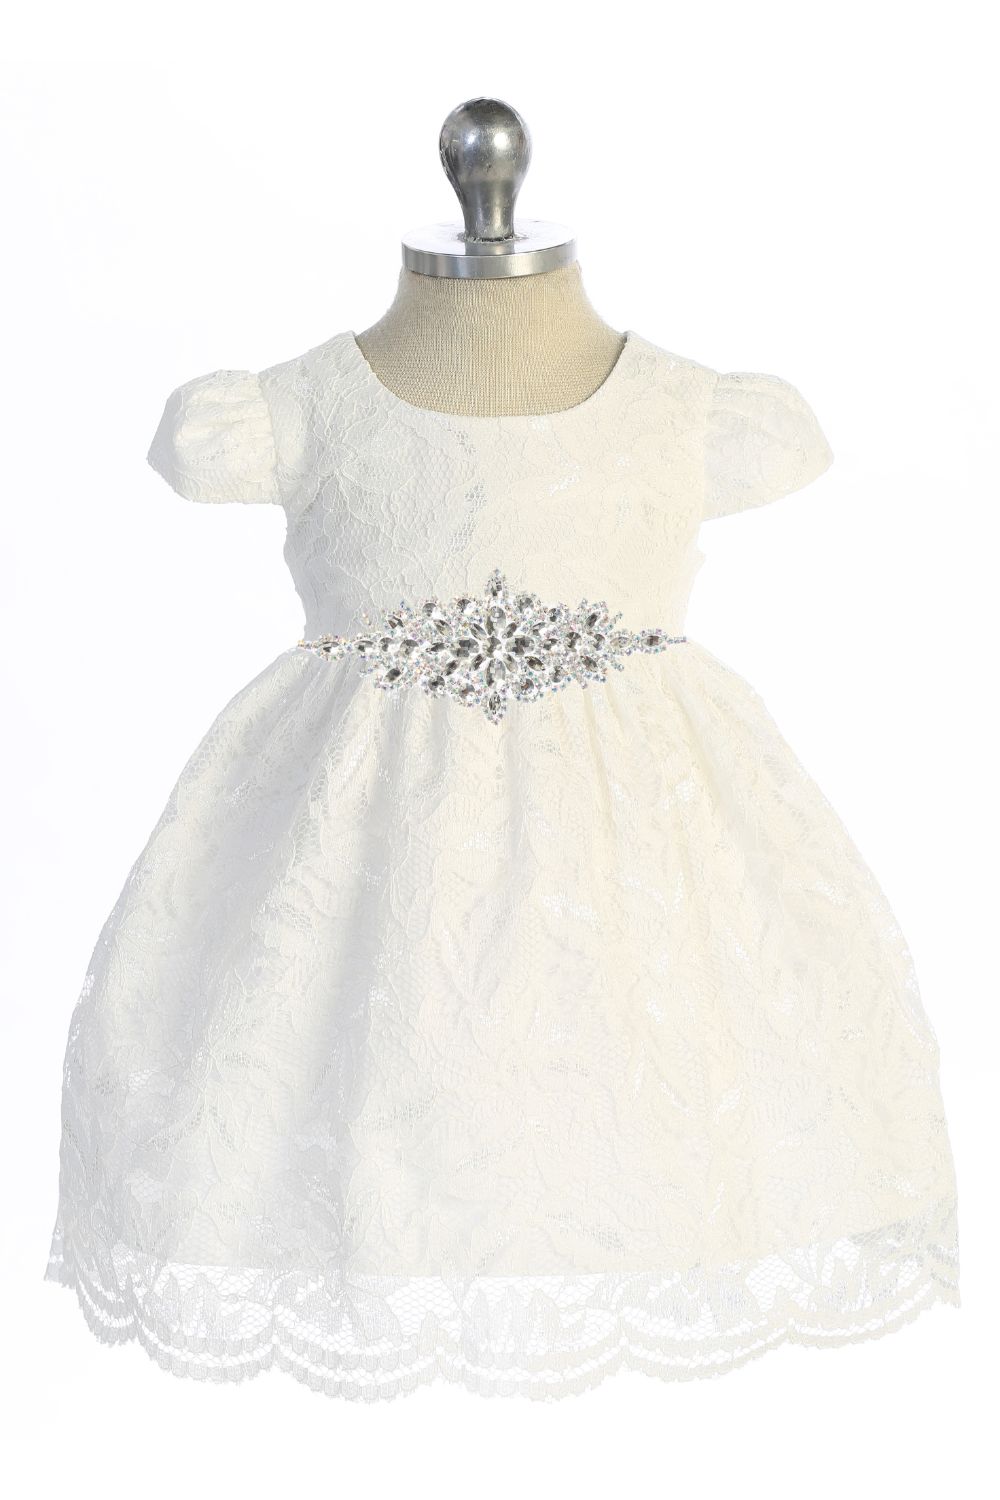 532-D- Lace V Back Bow Baby Dress w/ Diamond Shape Rhinestone Trim